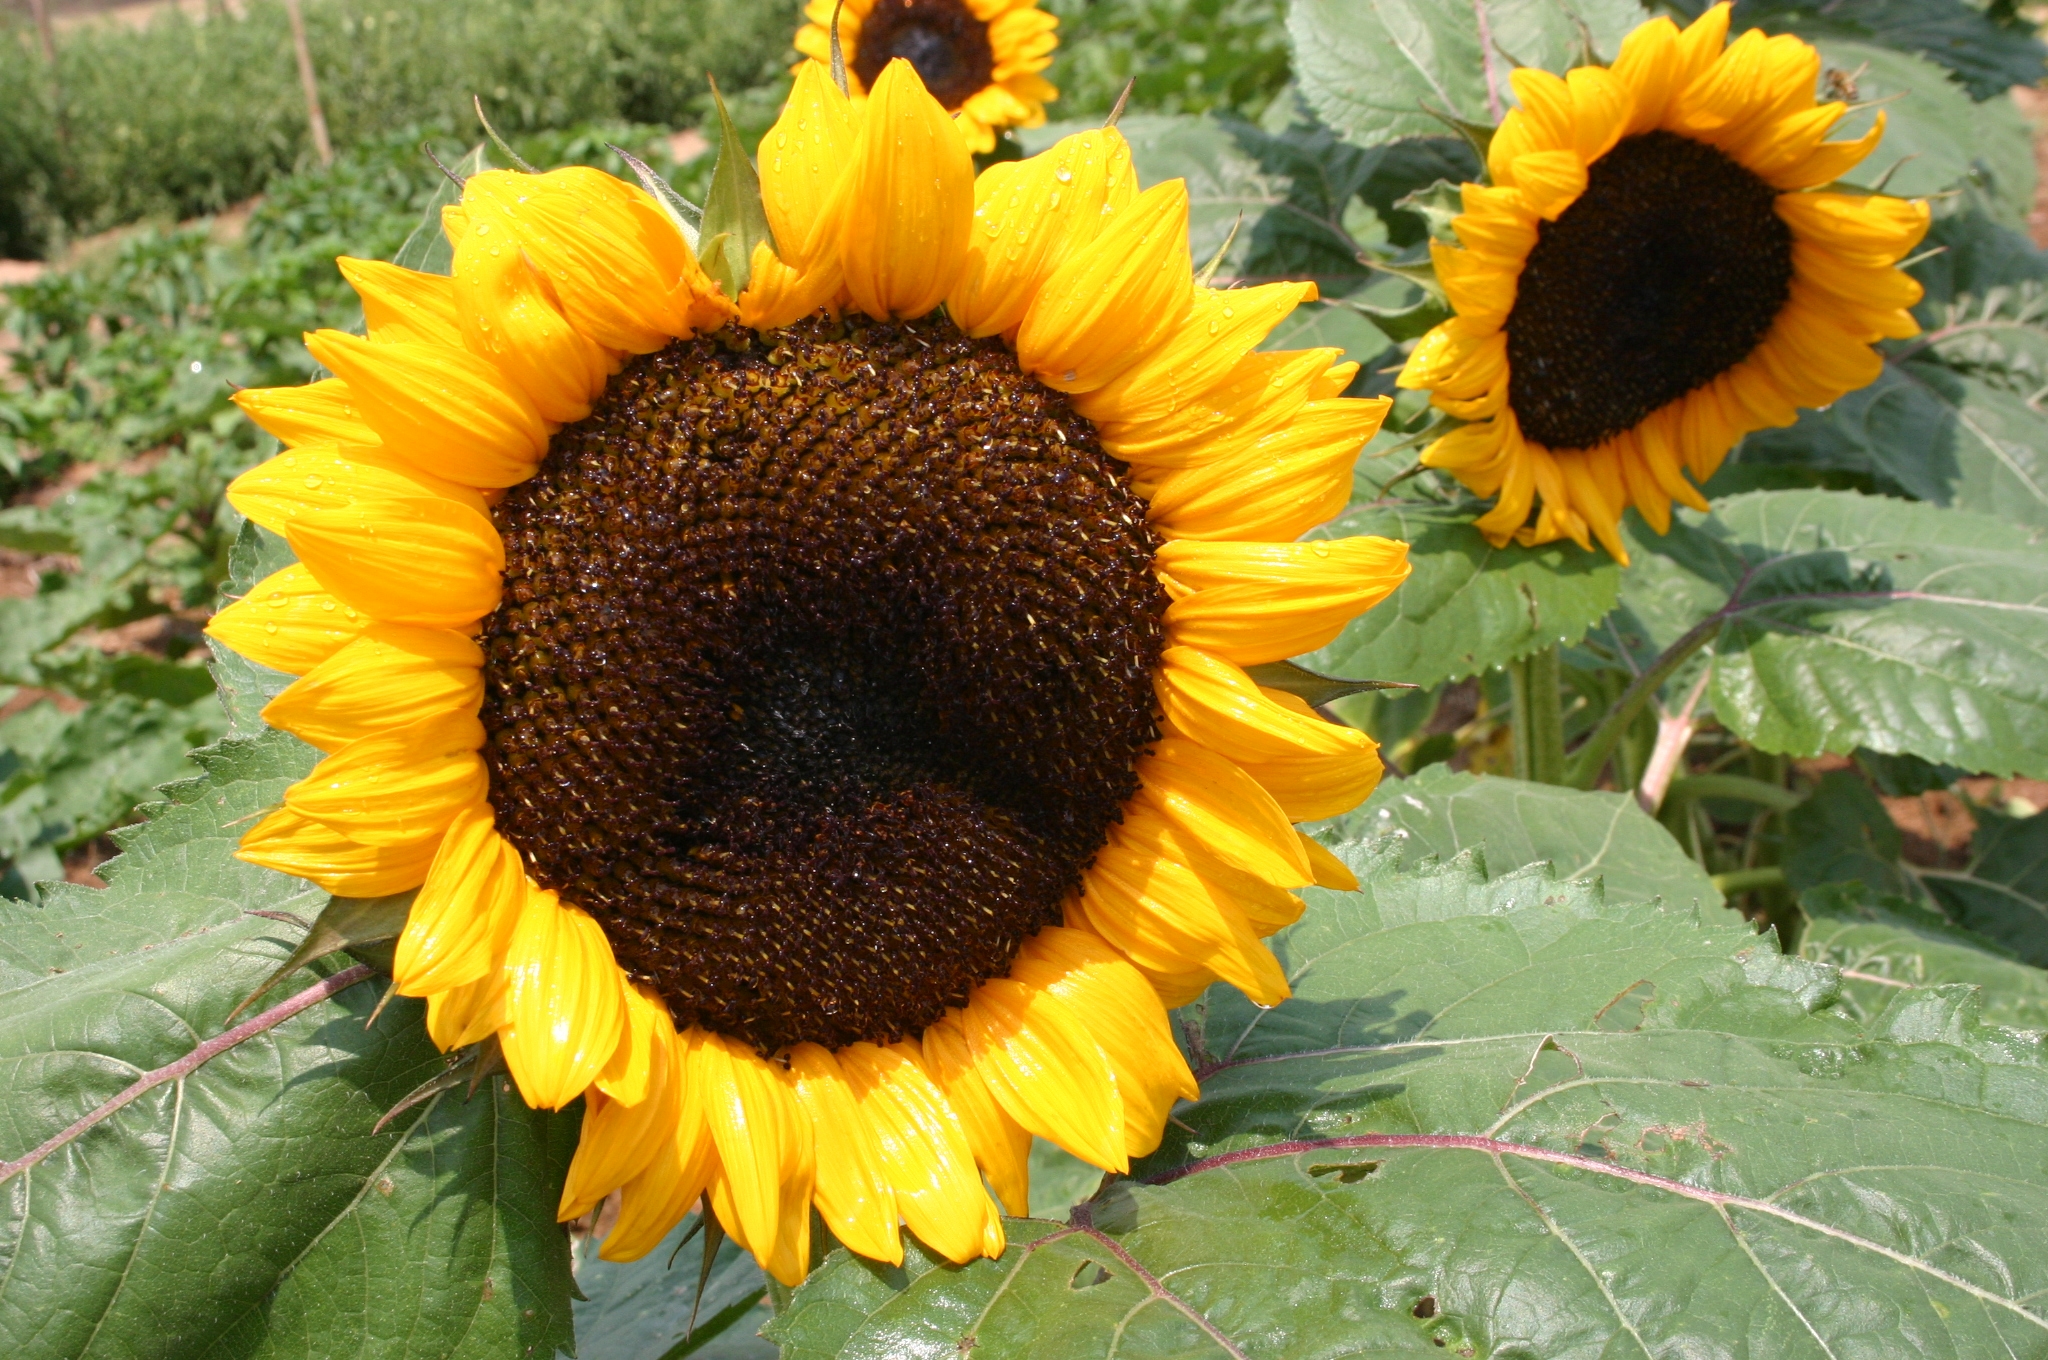 sunflower 1